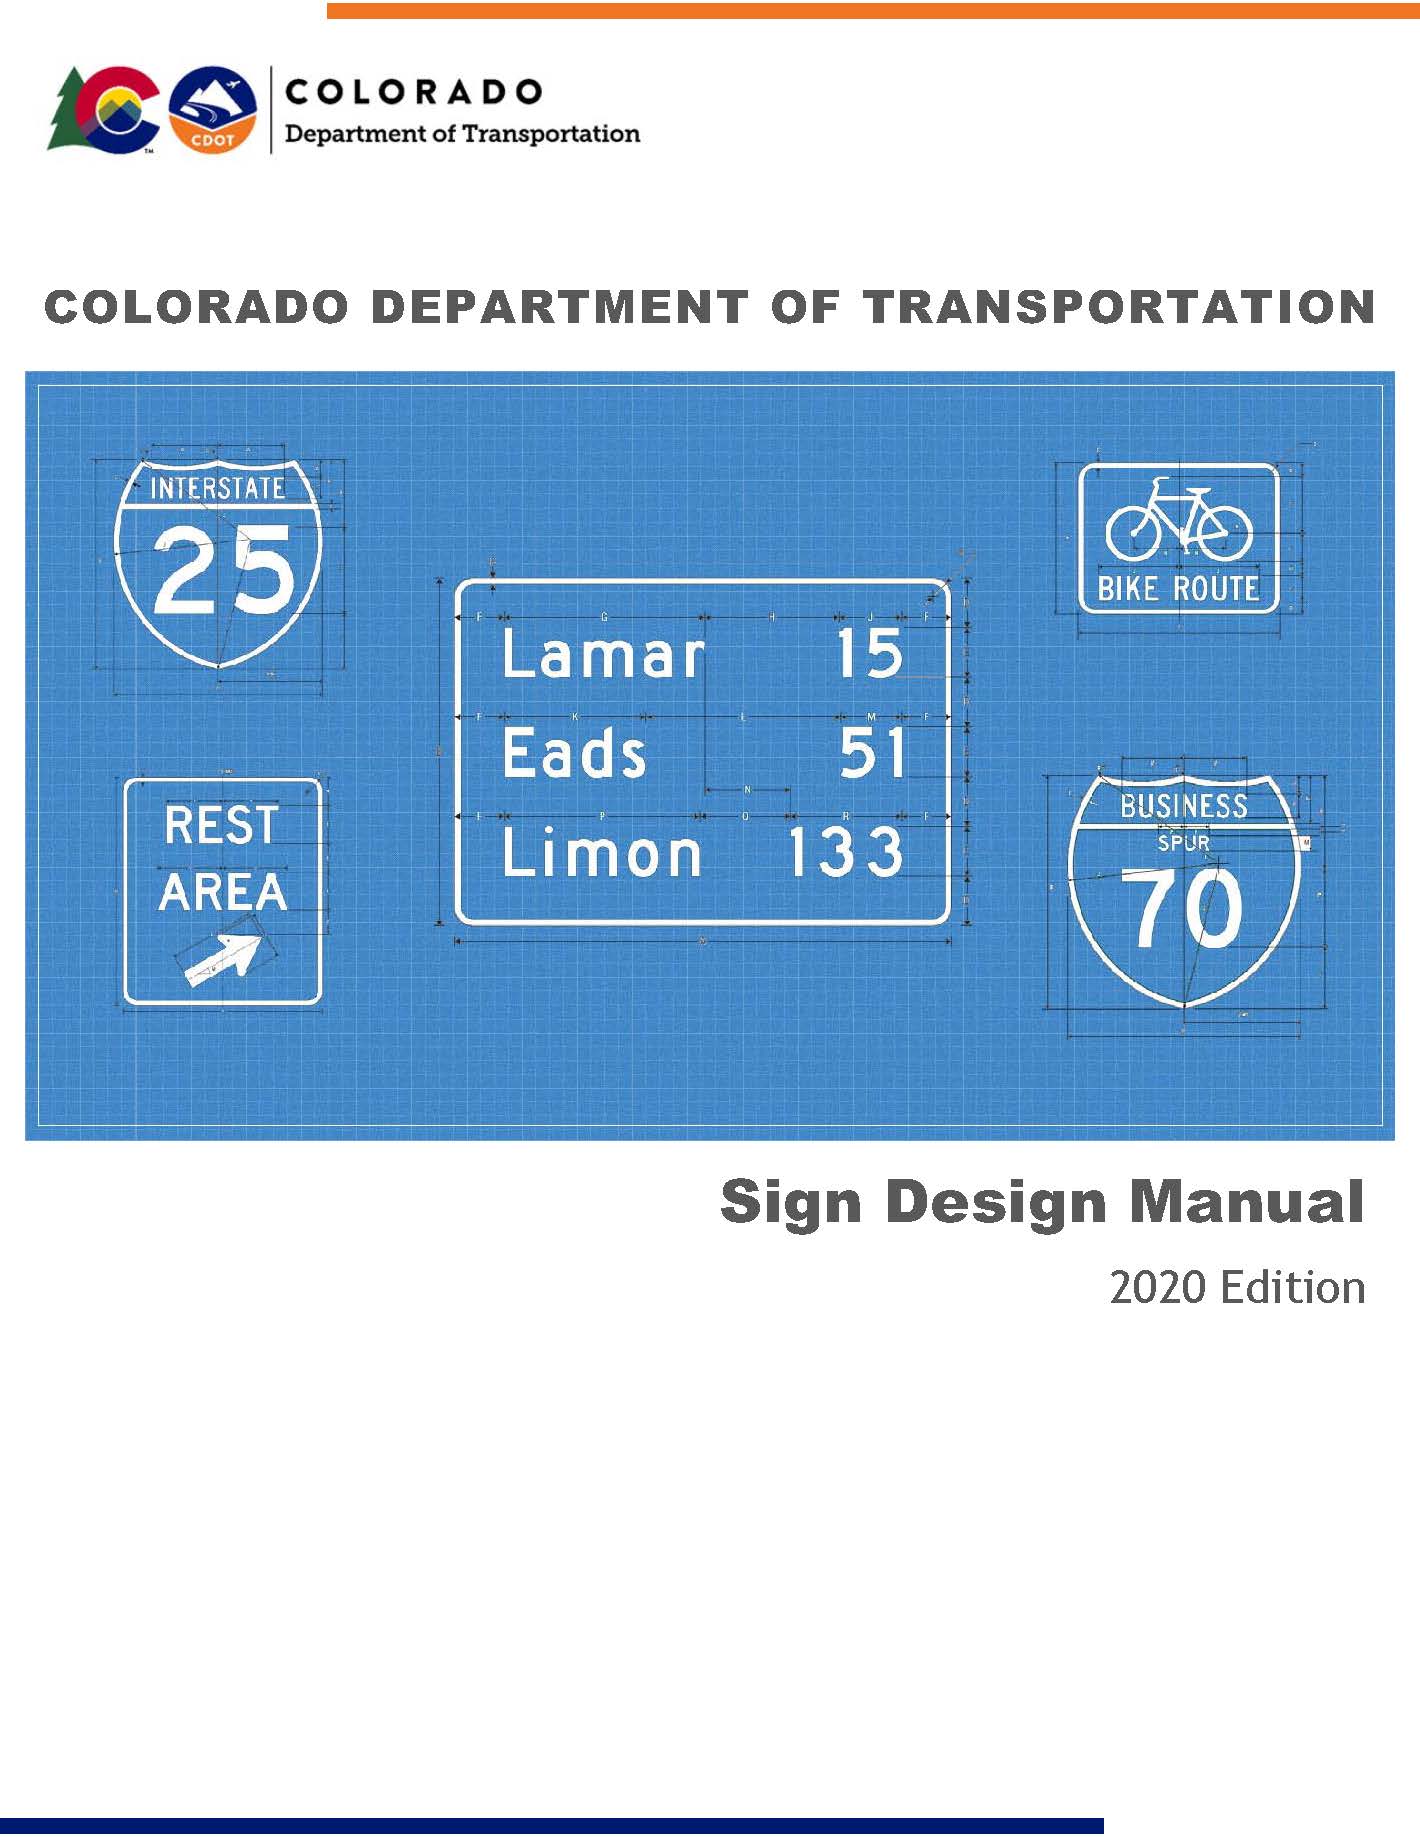 Sign Design Manual detail image